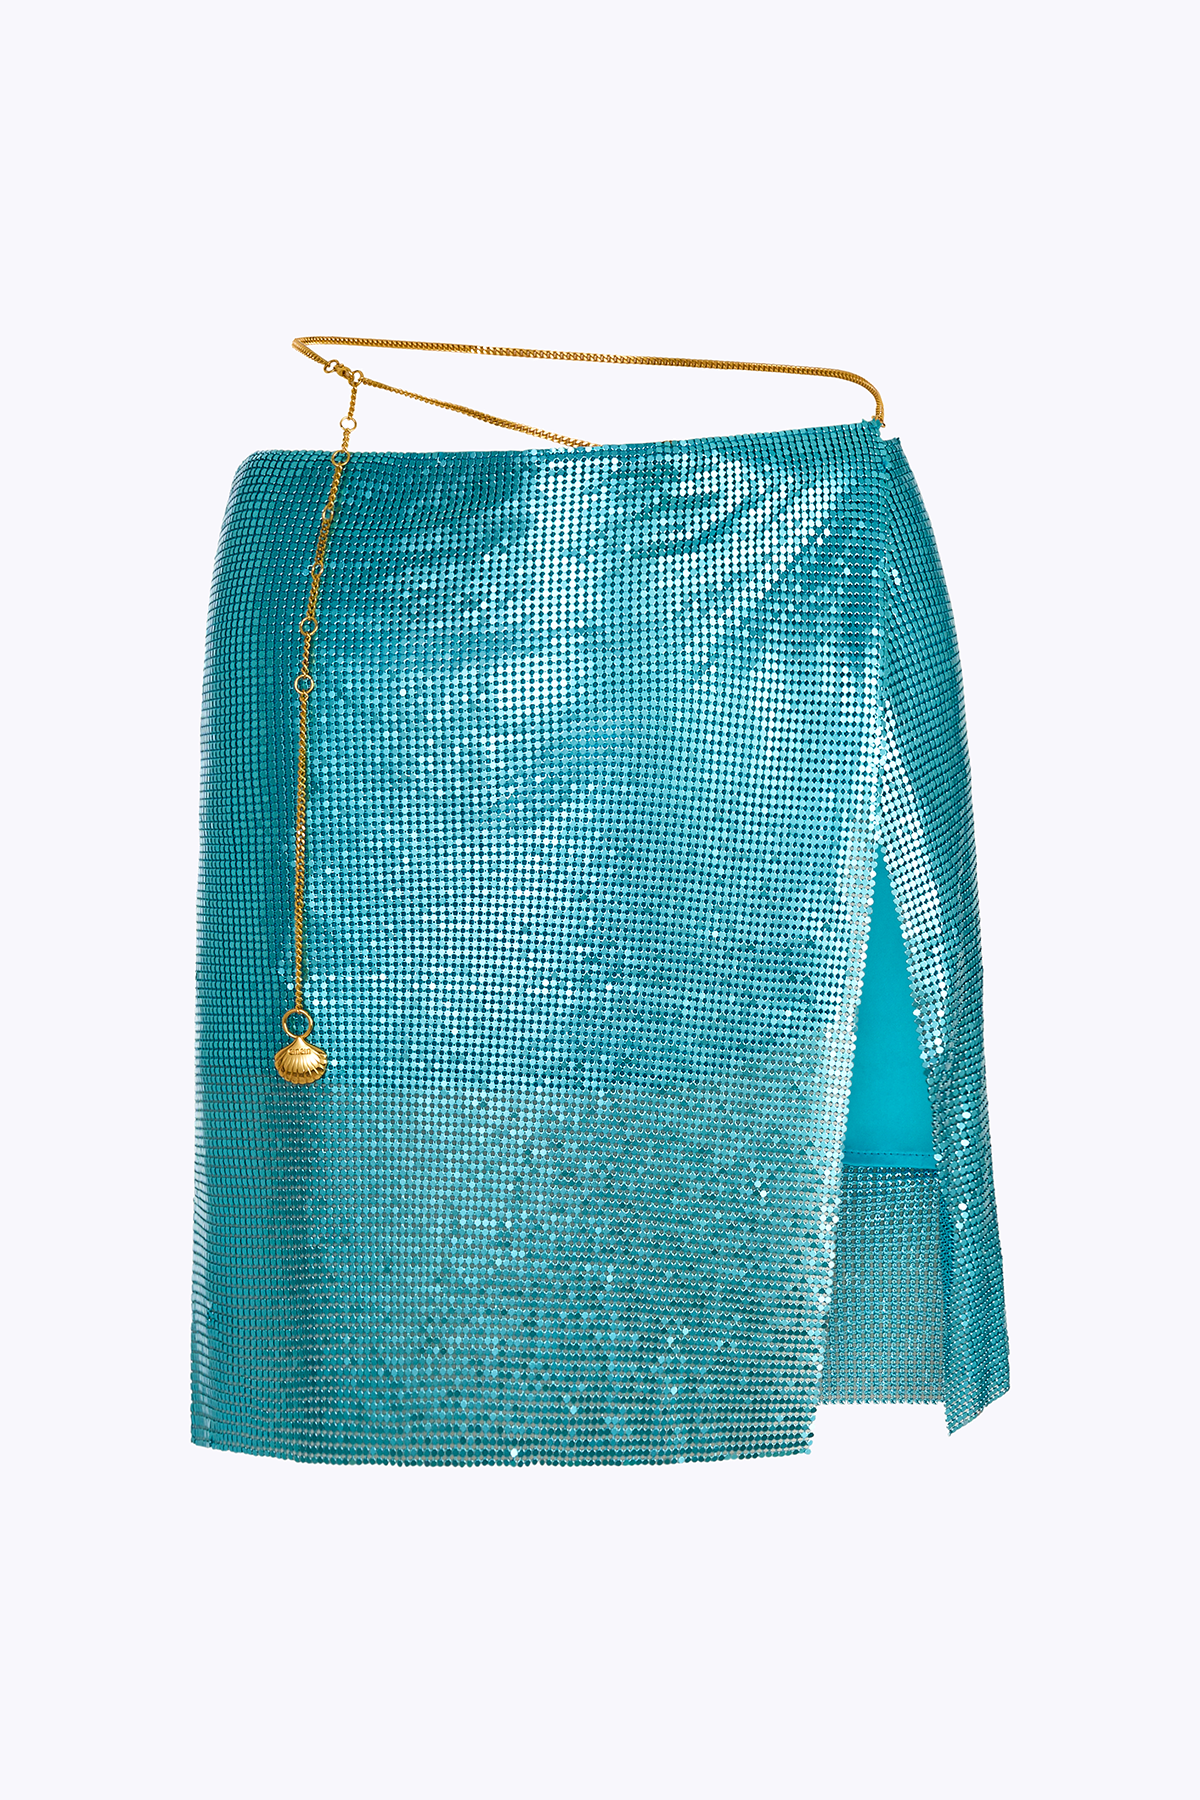 'Tropic' Chainmail Skirt - Oceania